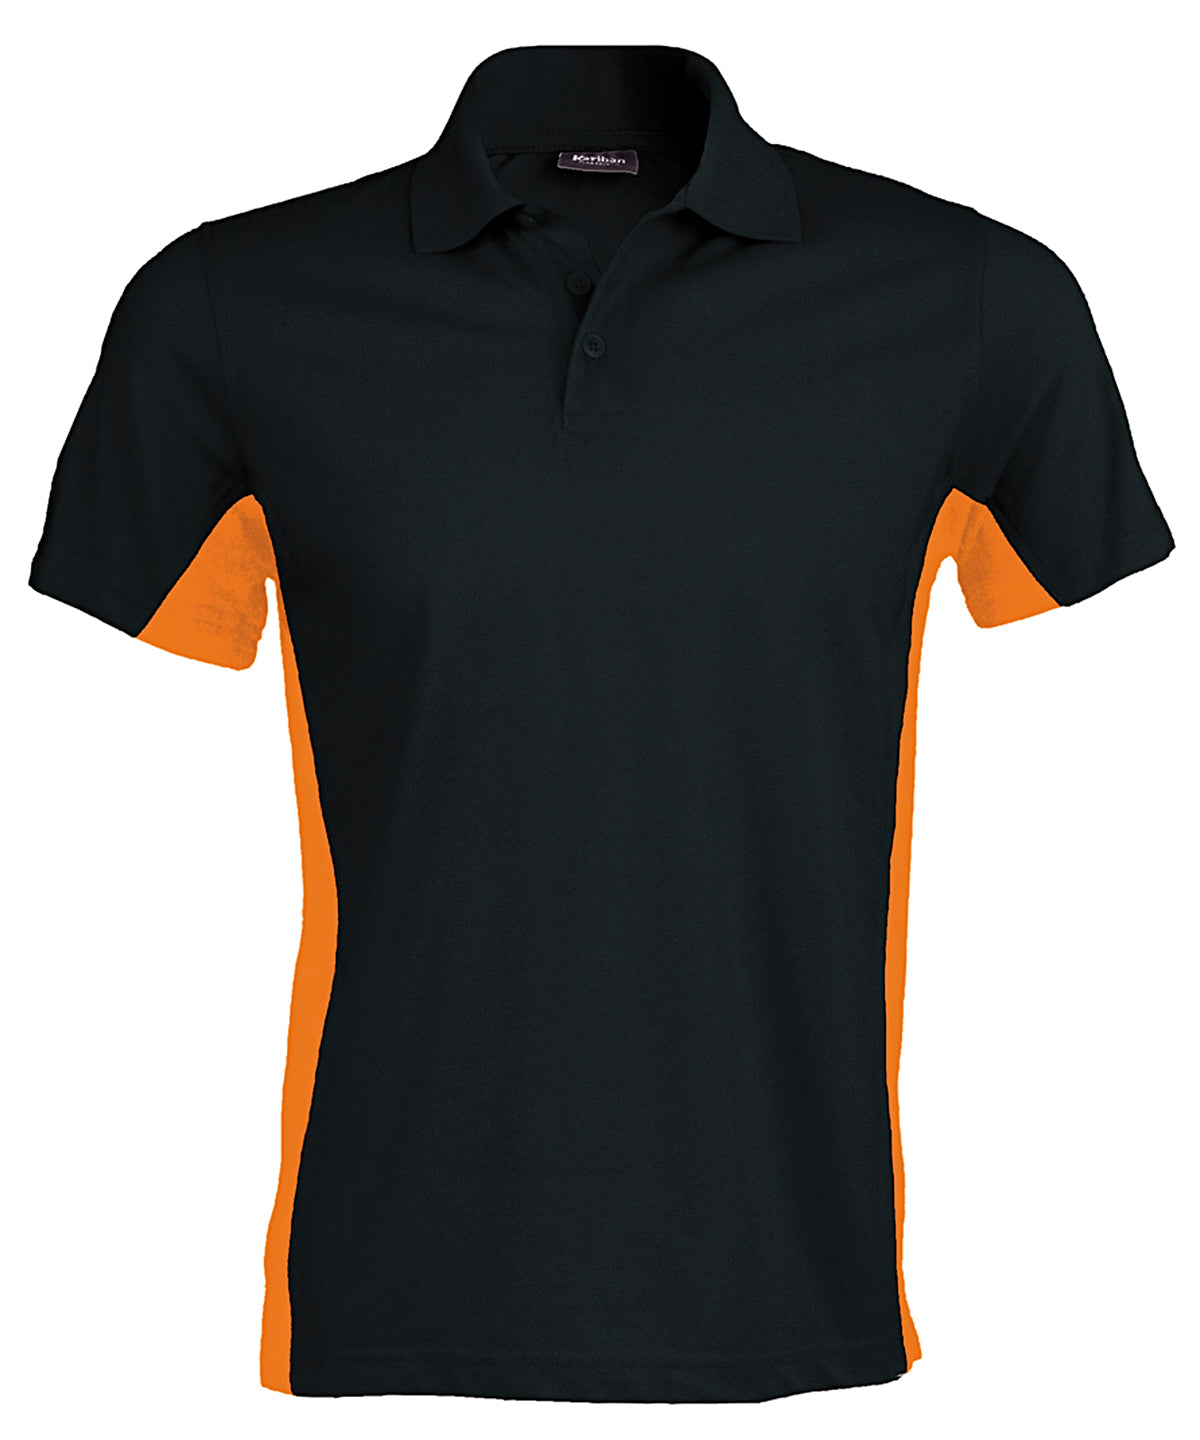 Personalised Polo Shirts - Black Kariban Flags short sleeve bi-colour polo shirt